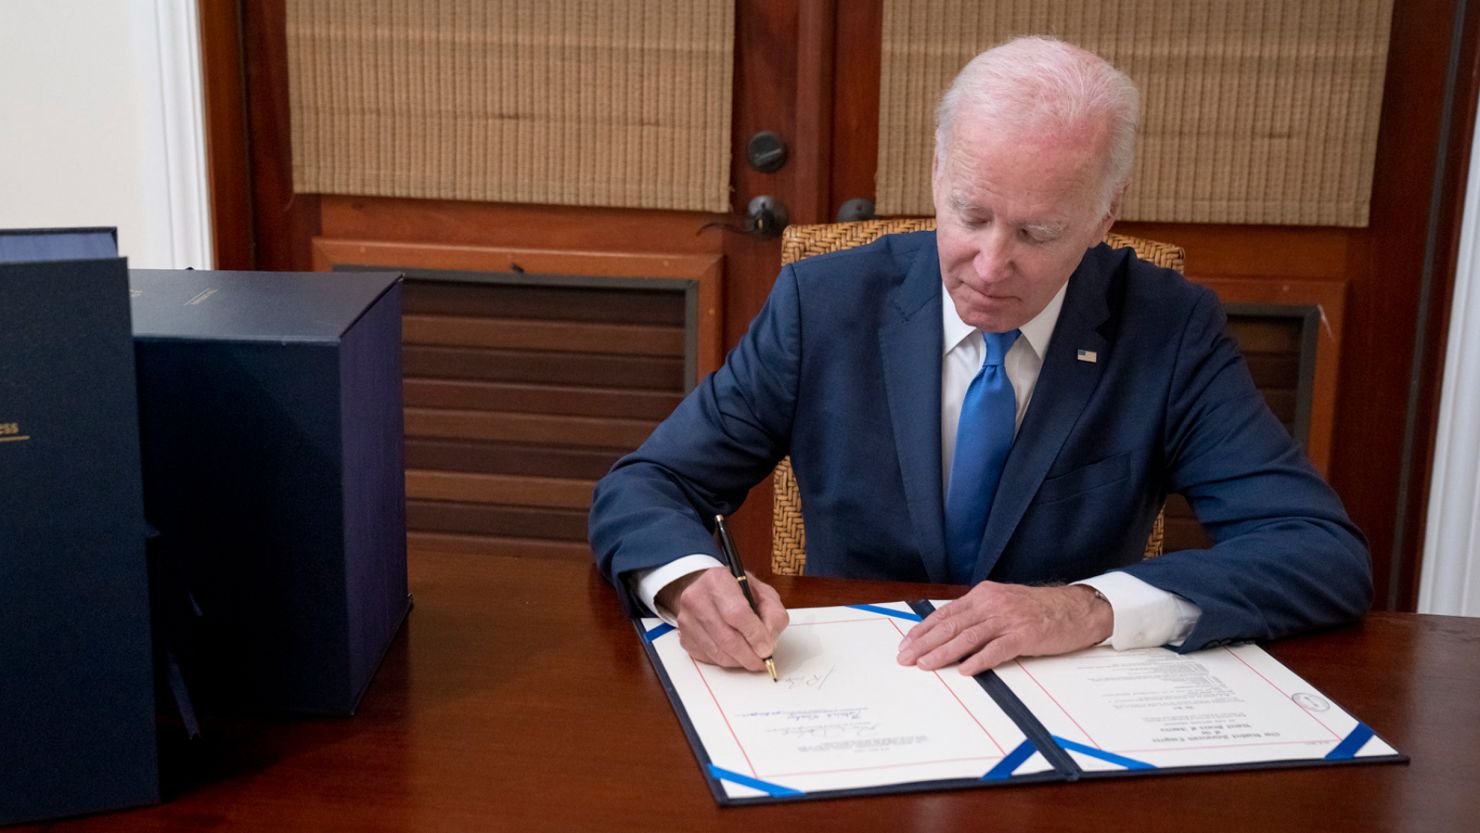 Biden Signs 1 7 Trillion Government Spending Bill Into Law Cnn Politics